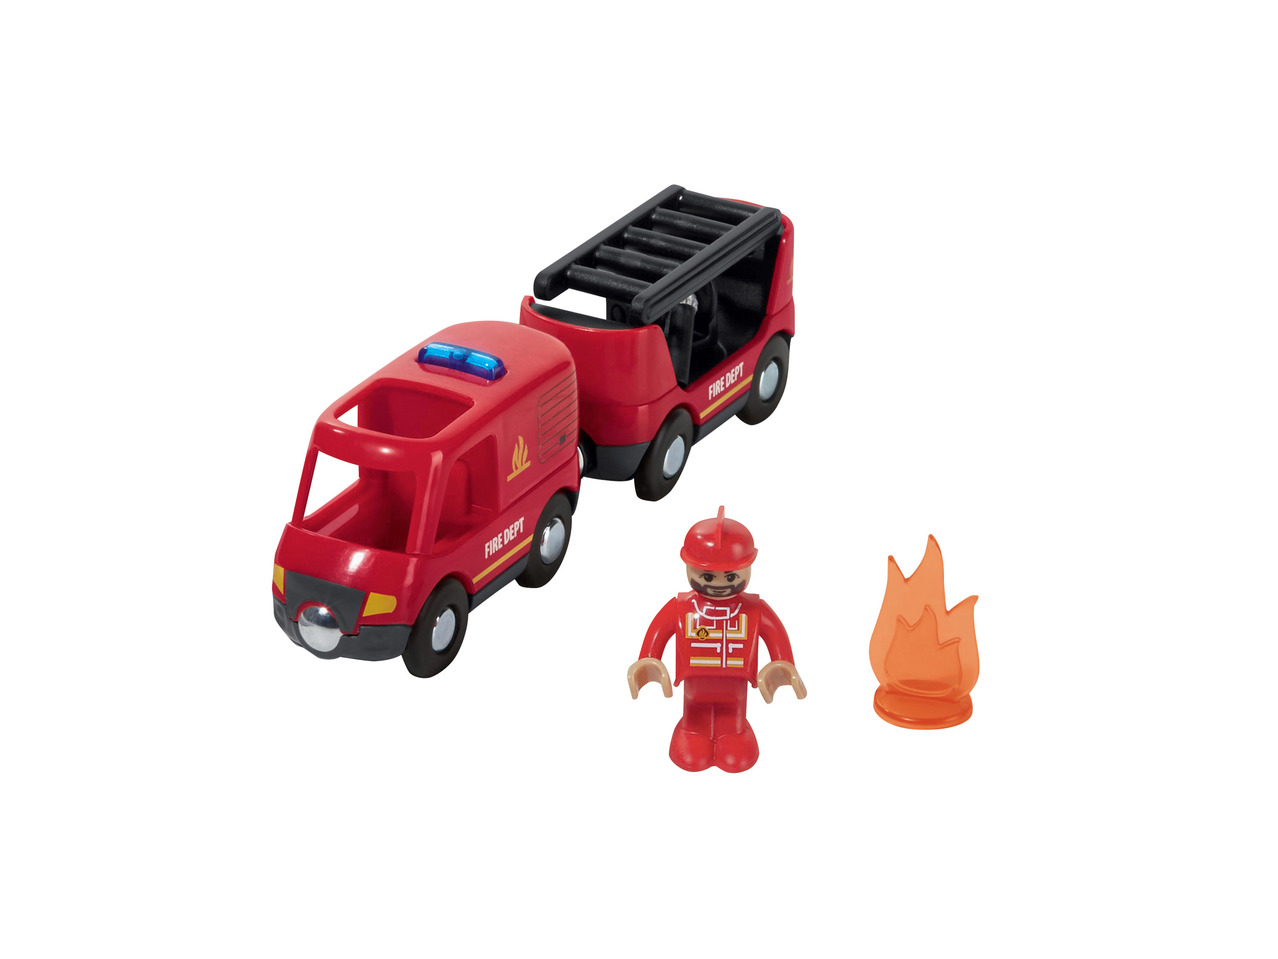 PLAYTIVE JUNIOR Toy Emergency Vehicles